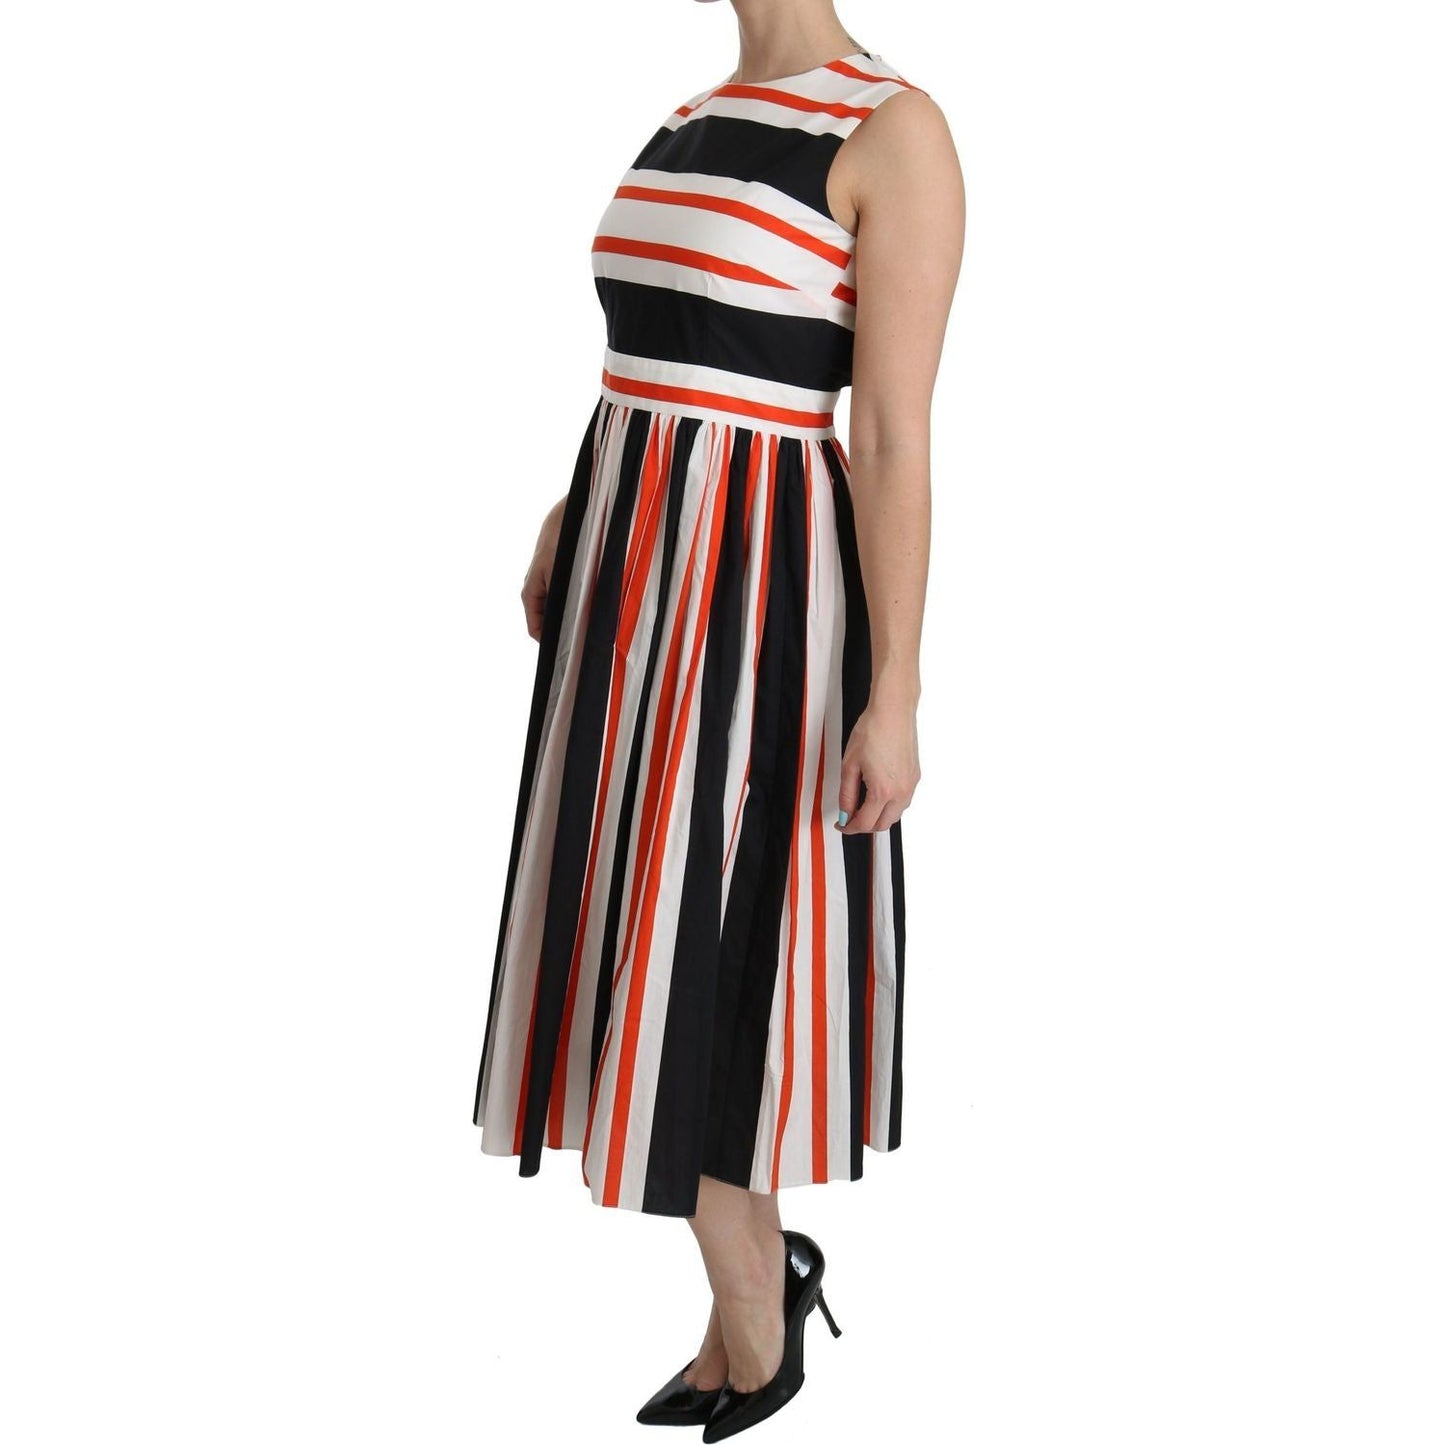 Dolce & Gabbana A-Line Pleated Midi Fashion Dress multicolor-stripes-a-line-pleated-midi-dress IMG_0232-scaled-4cbe384a-eec.jpg